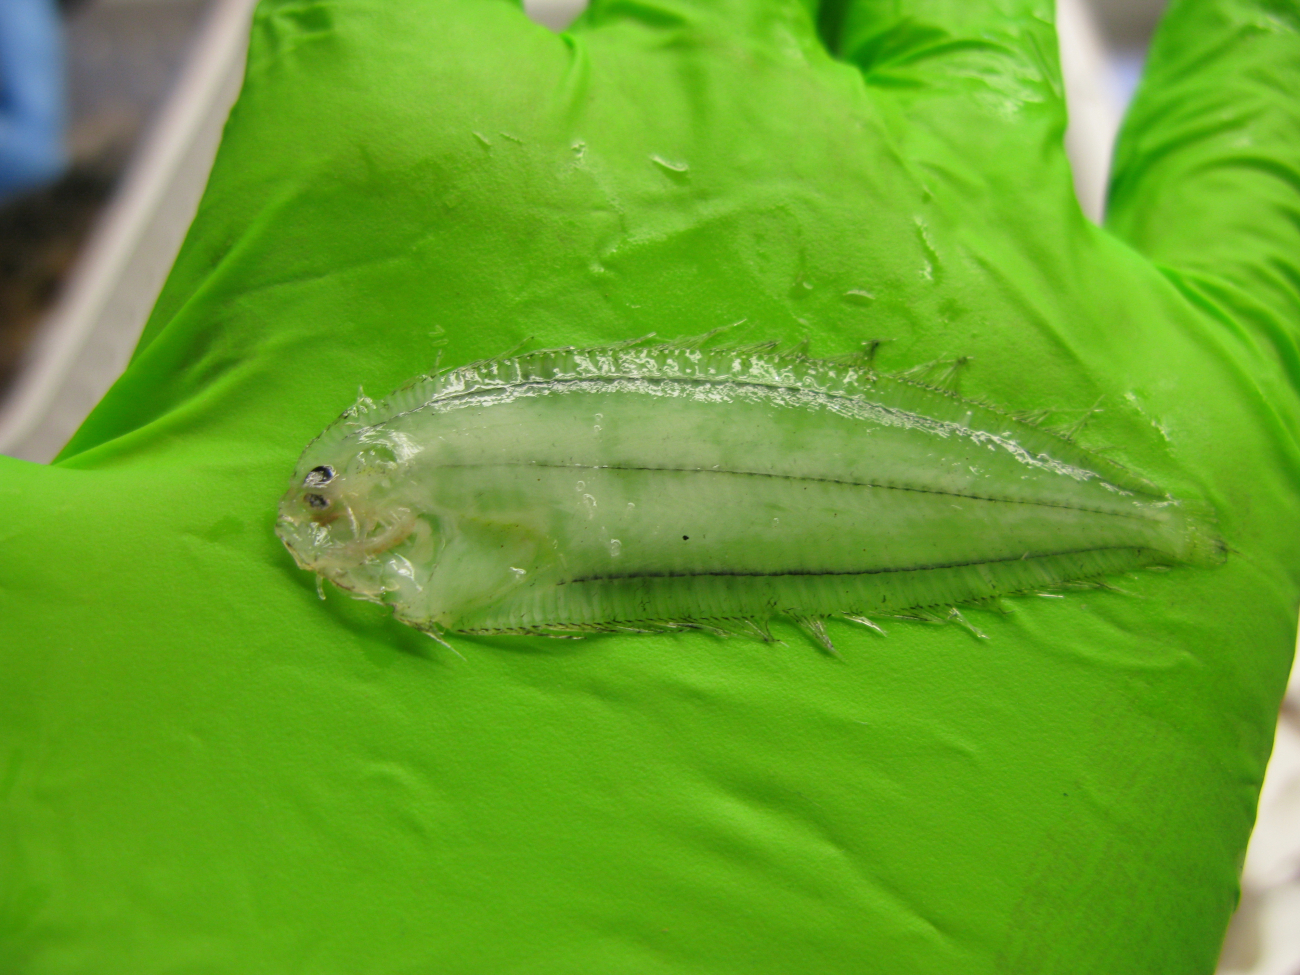 A juvenile flatfish